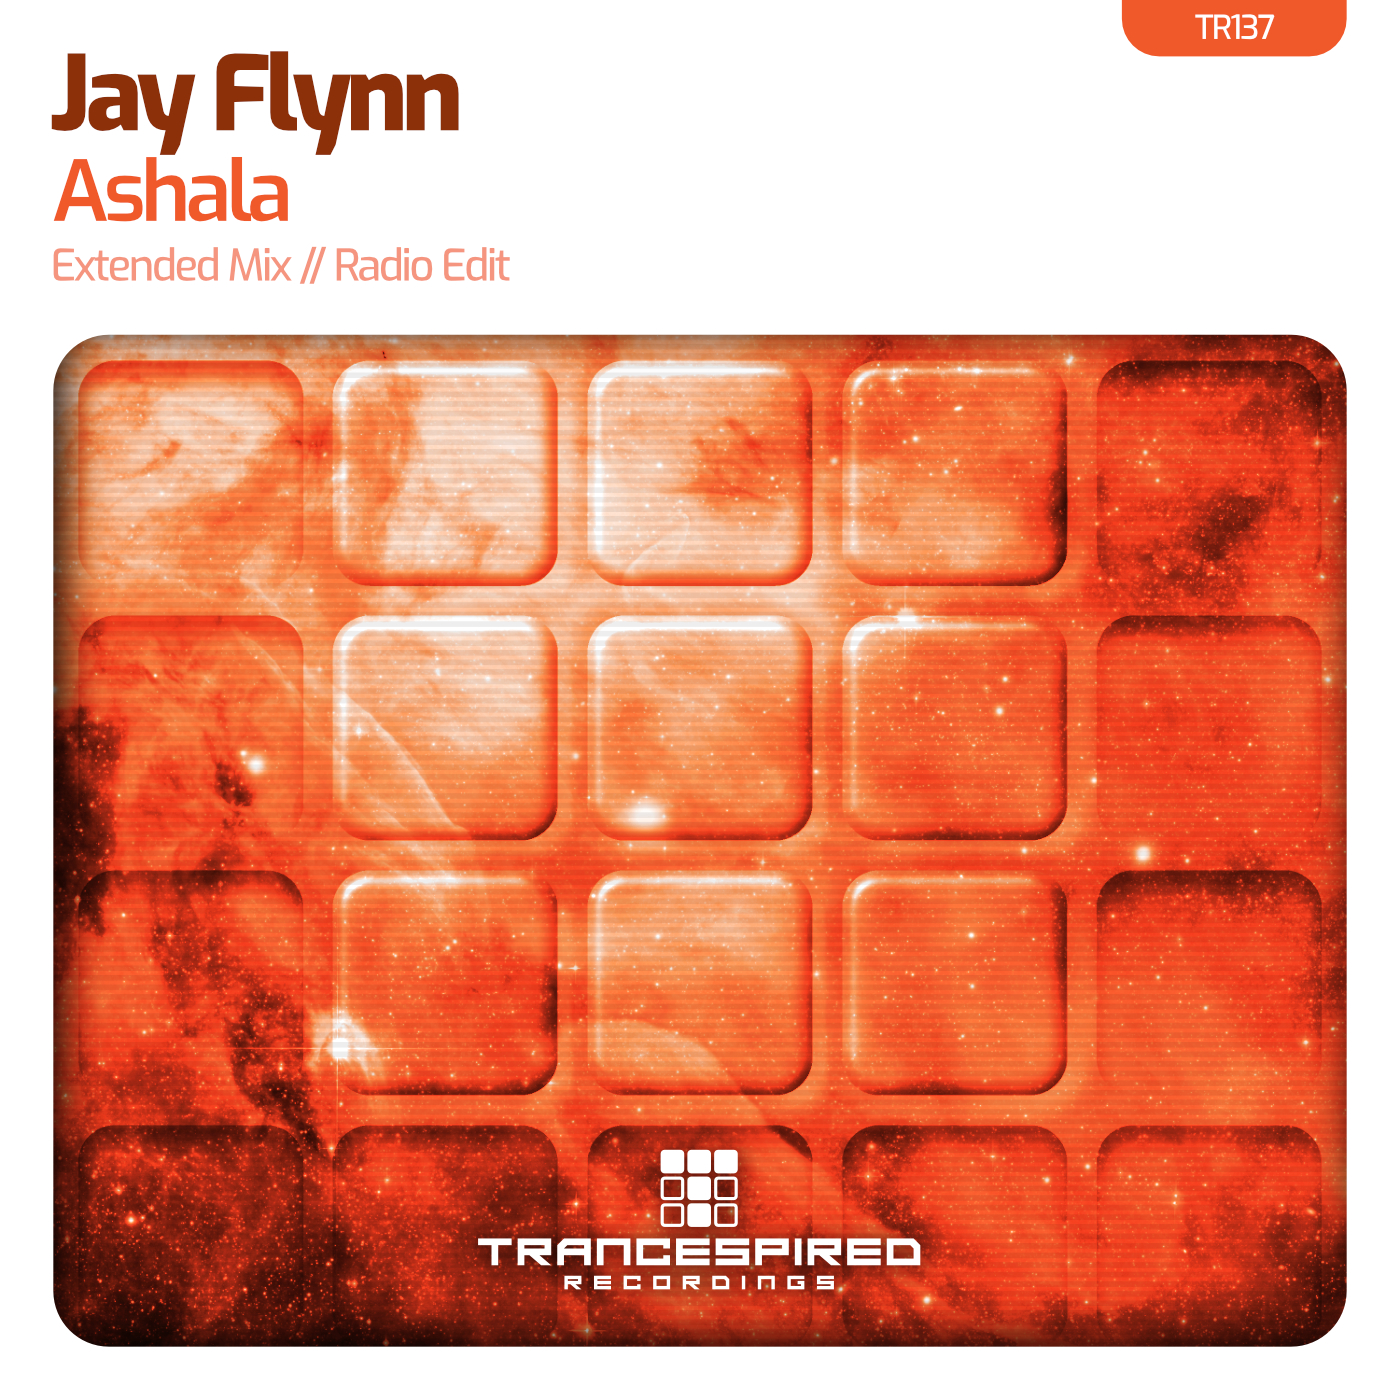 Jay Flynn presents Ashala on Trancespired Recordings